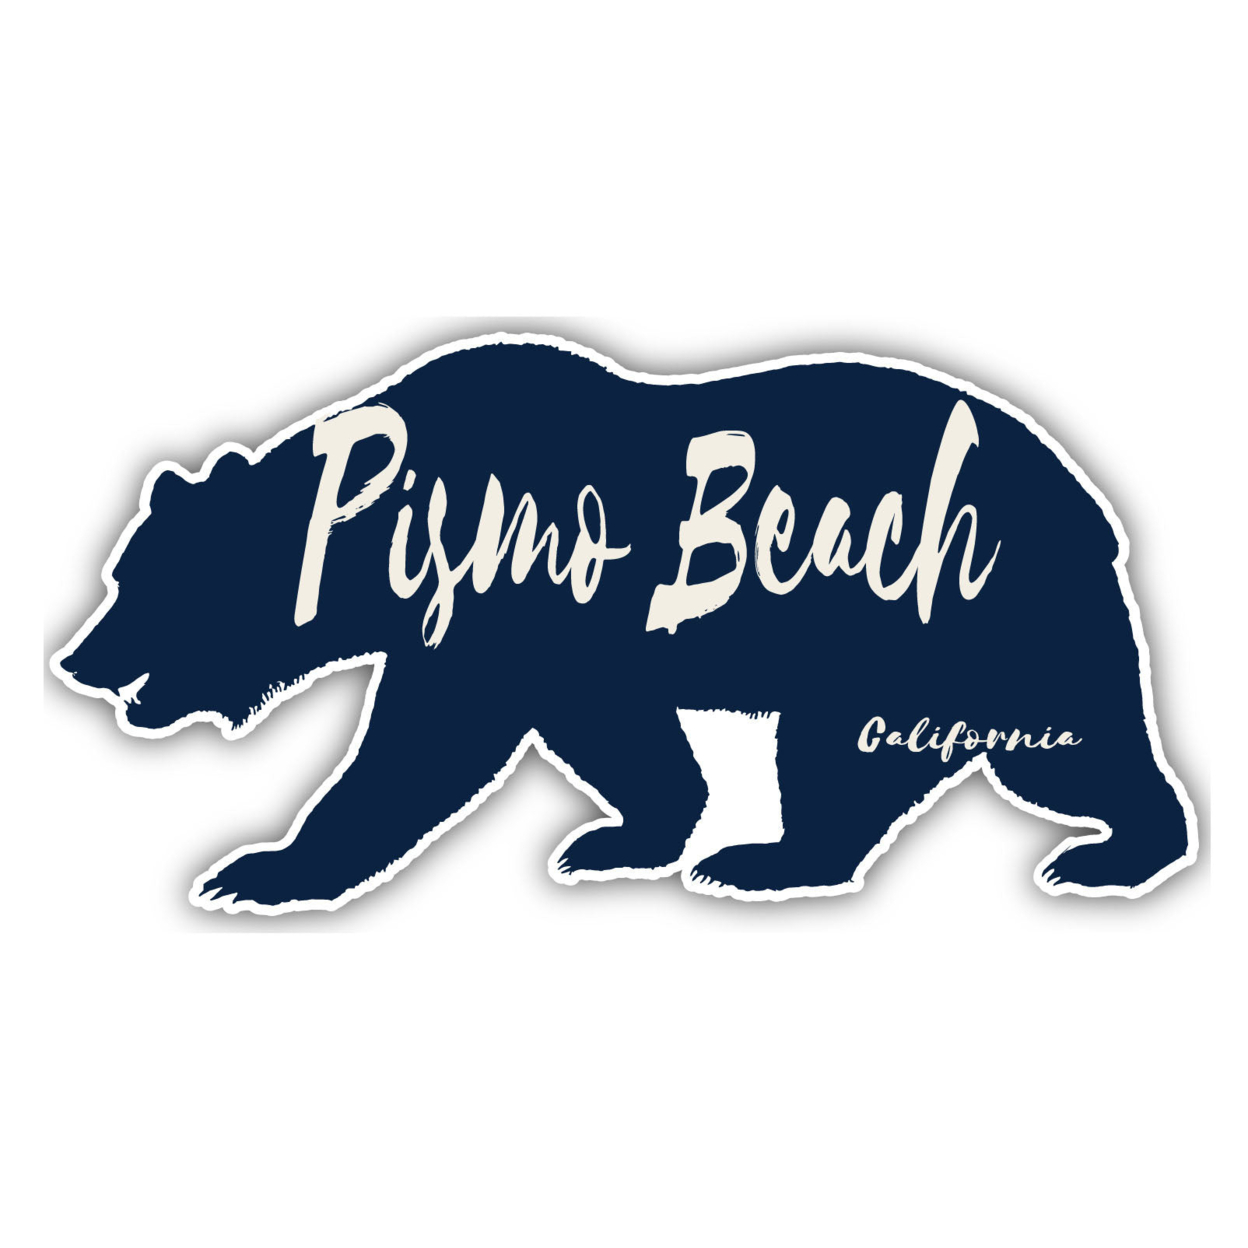 Pismo Beach California Souvenir Decorative Stickers (Choose Theme And Size) - Single Unit, 4-Inch, Bear